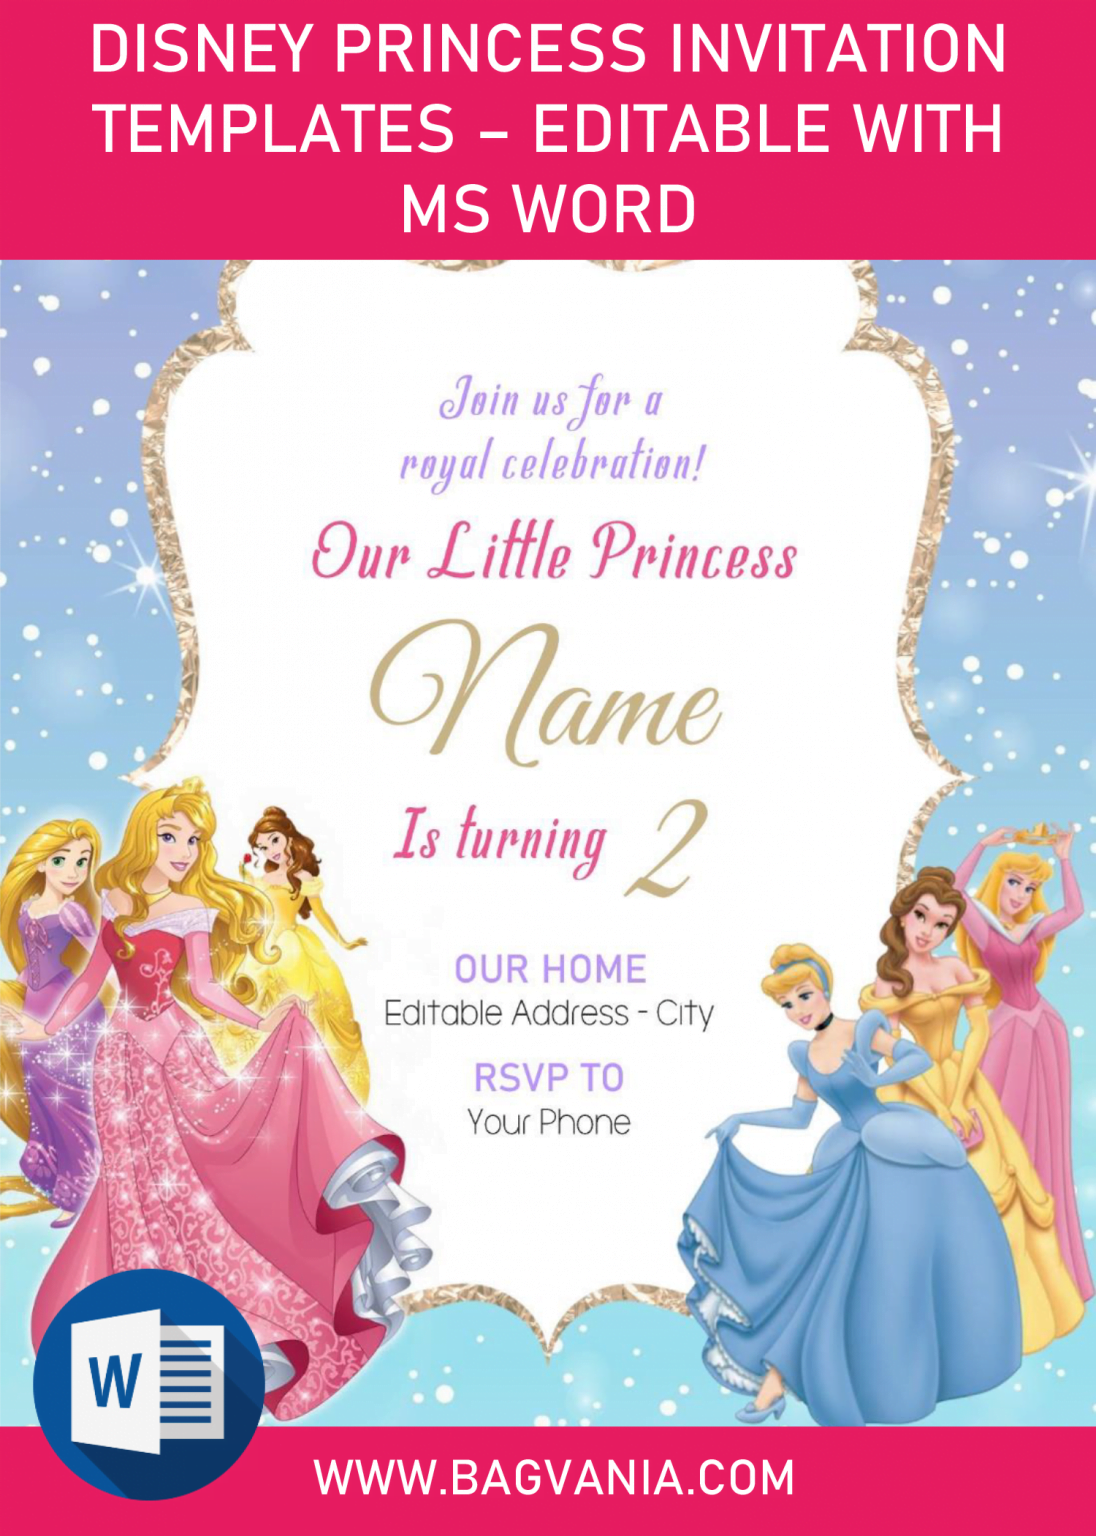 Disney Princess Invitation Templates Editable With MS Word FREE Printable Bi Disney Princess Invitations Princess Invitations Princess Birthday Invitations - Disney Princess Birthday Invitations Free Printable